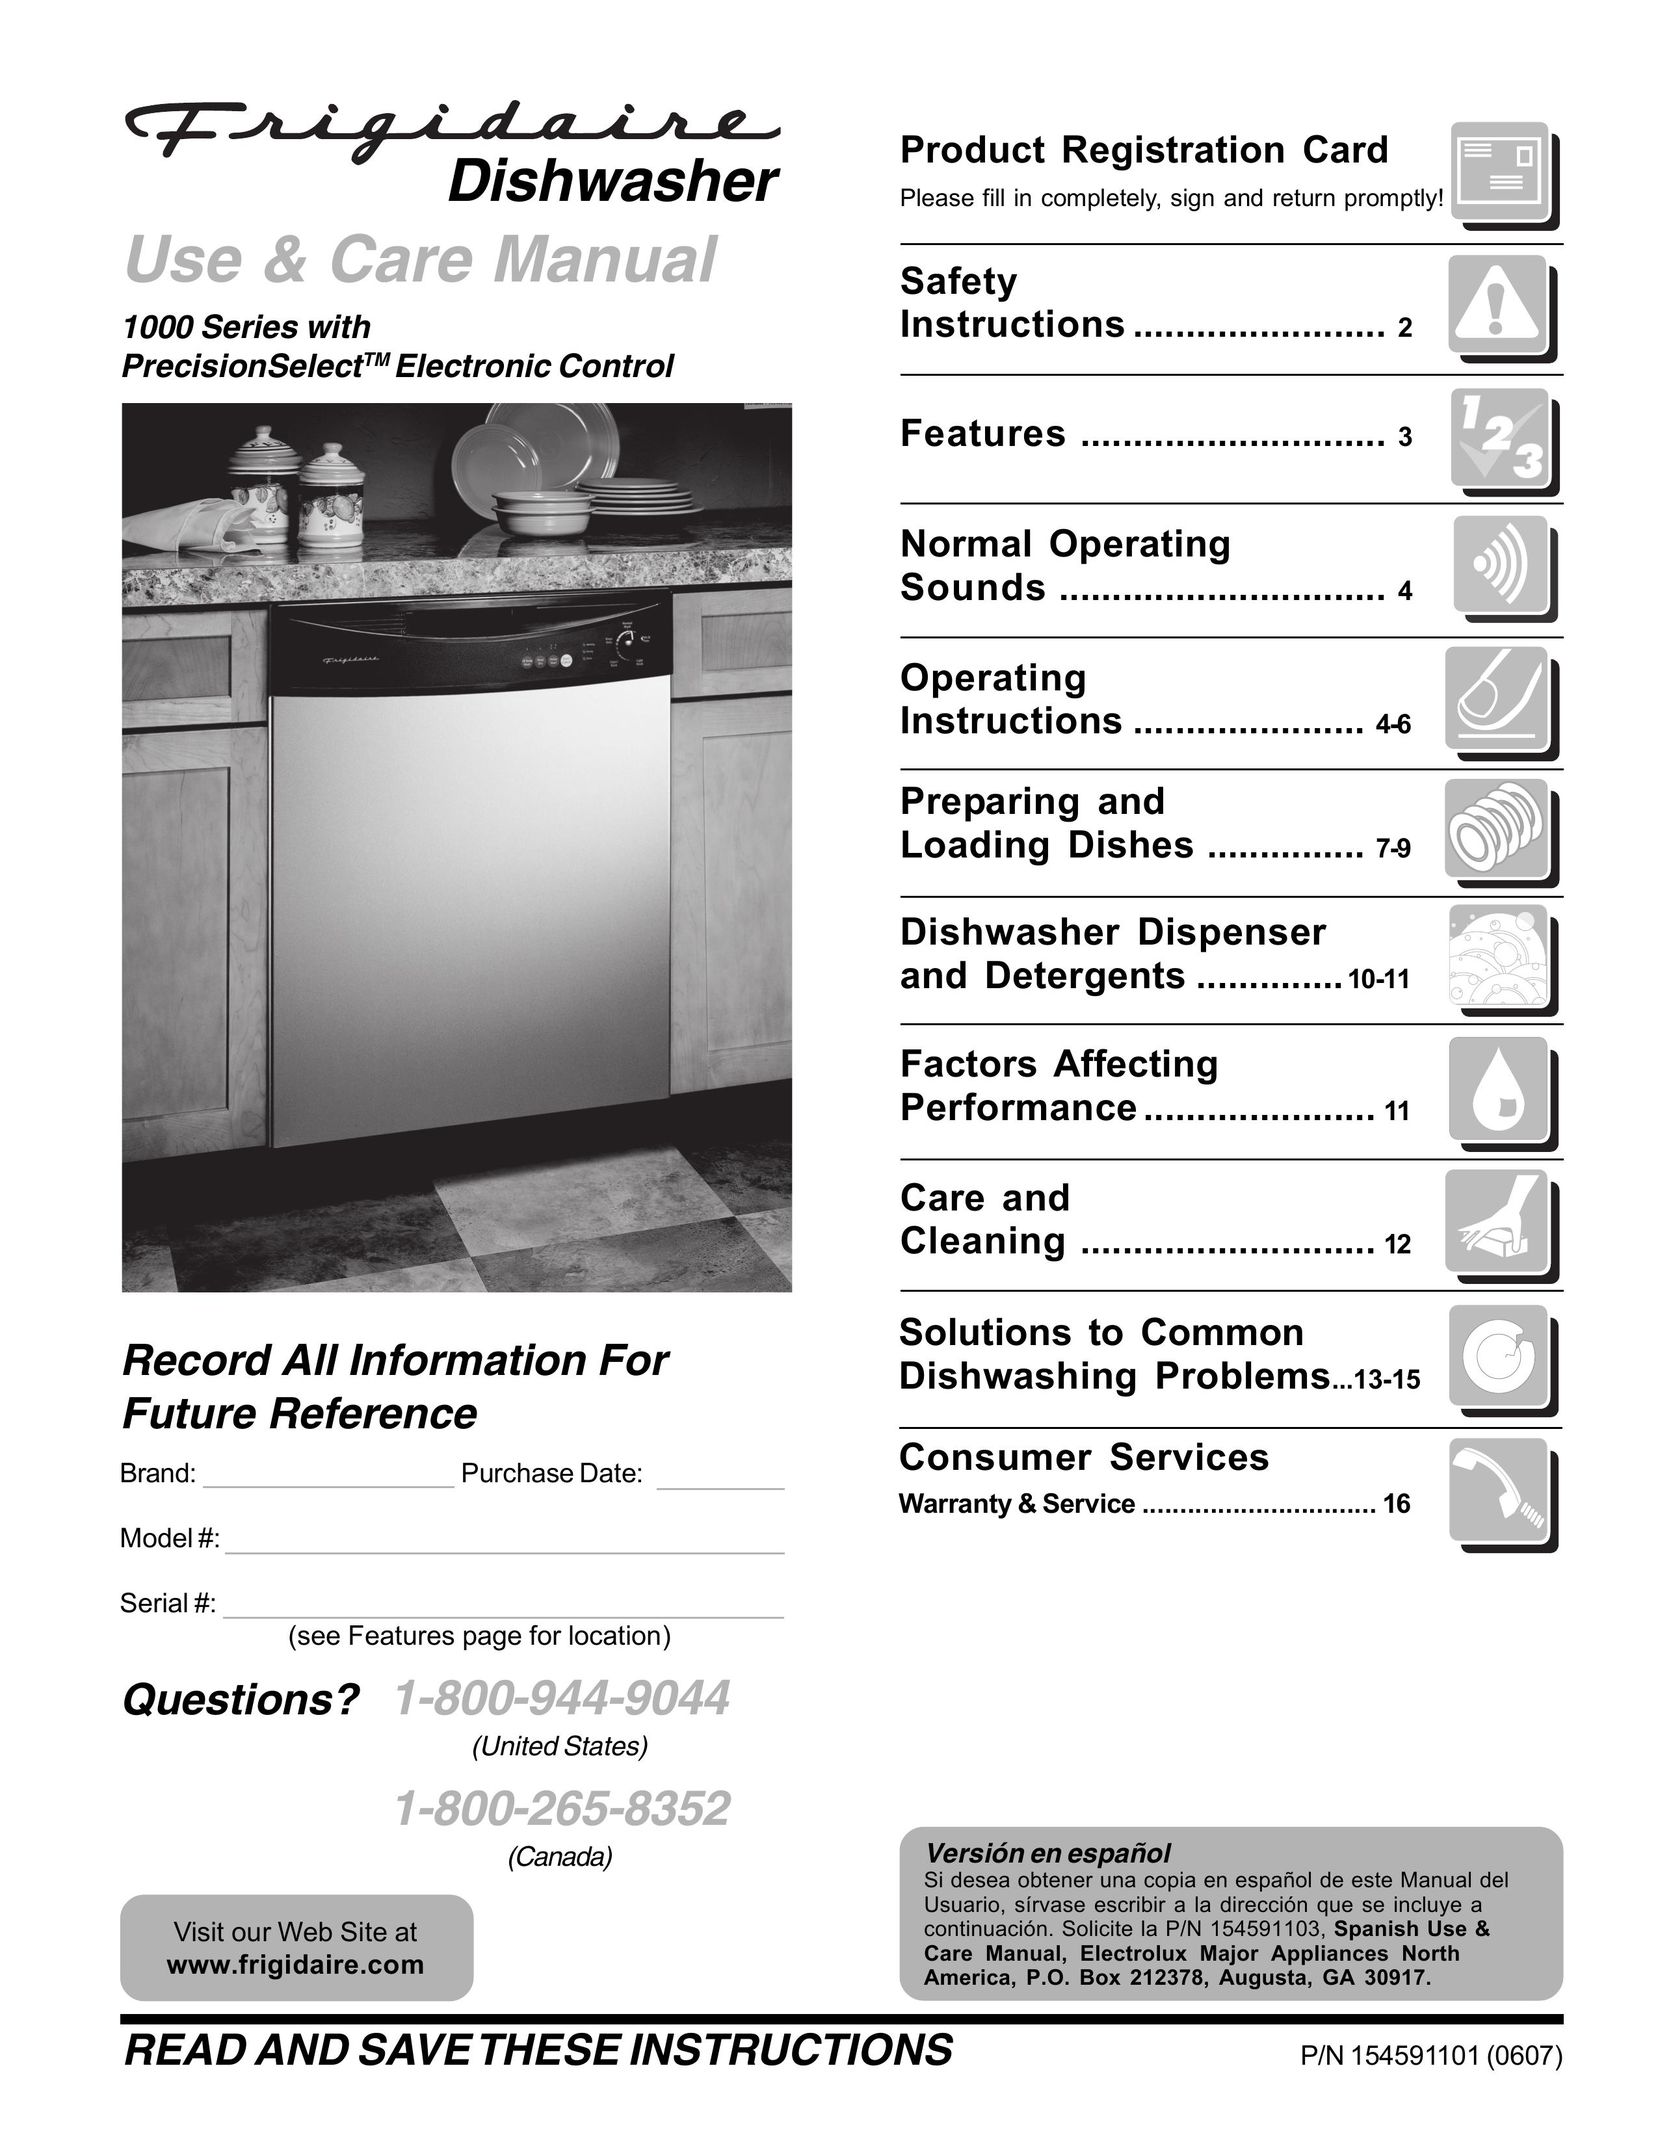 Frigidaire 1000 Series Dishwasher User Manual